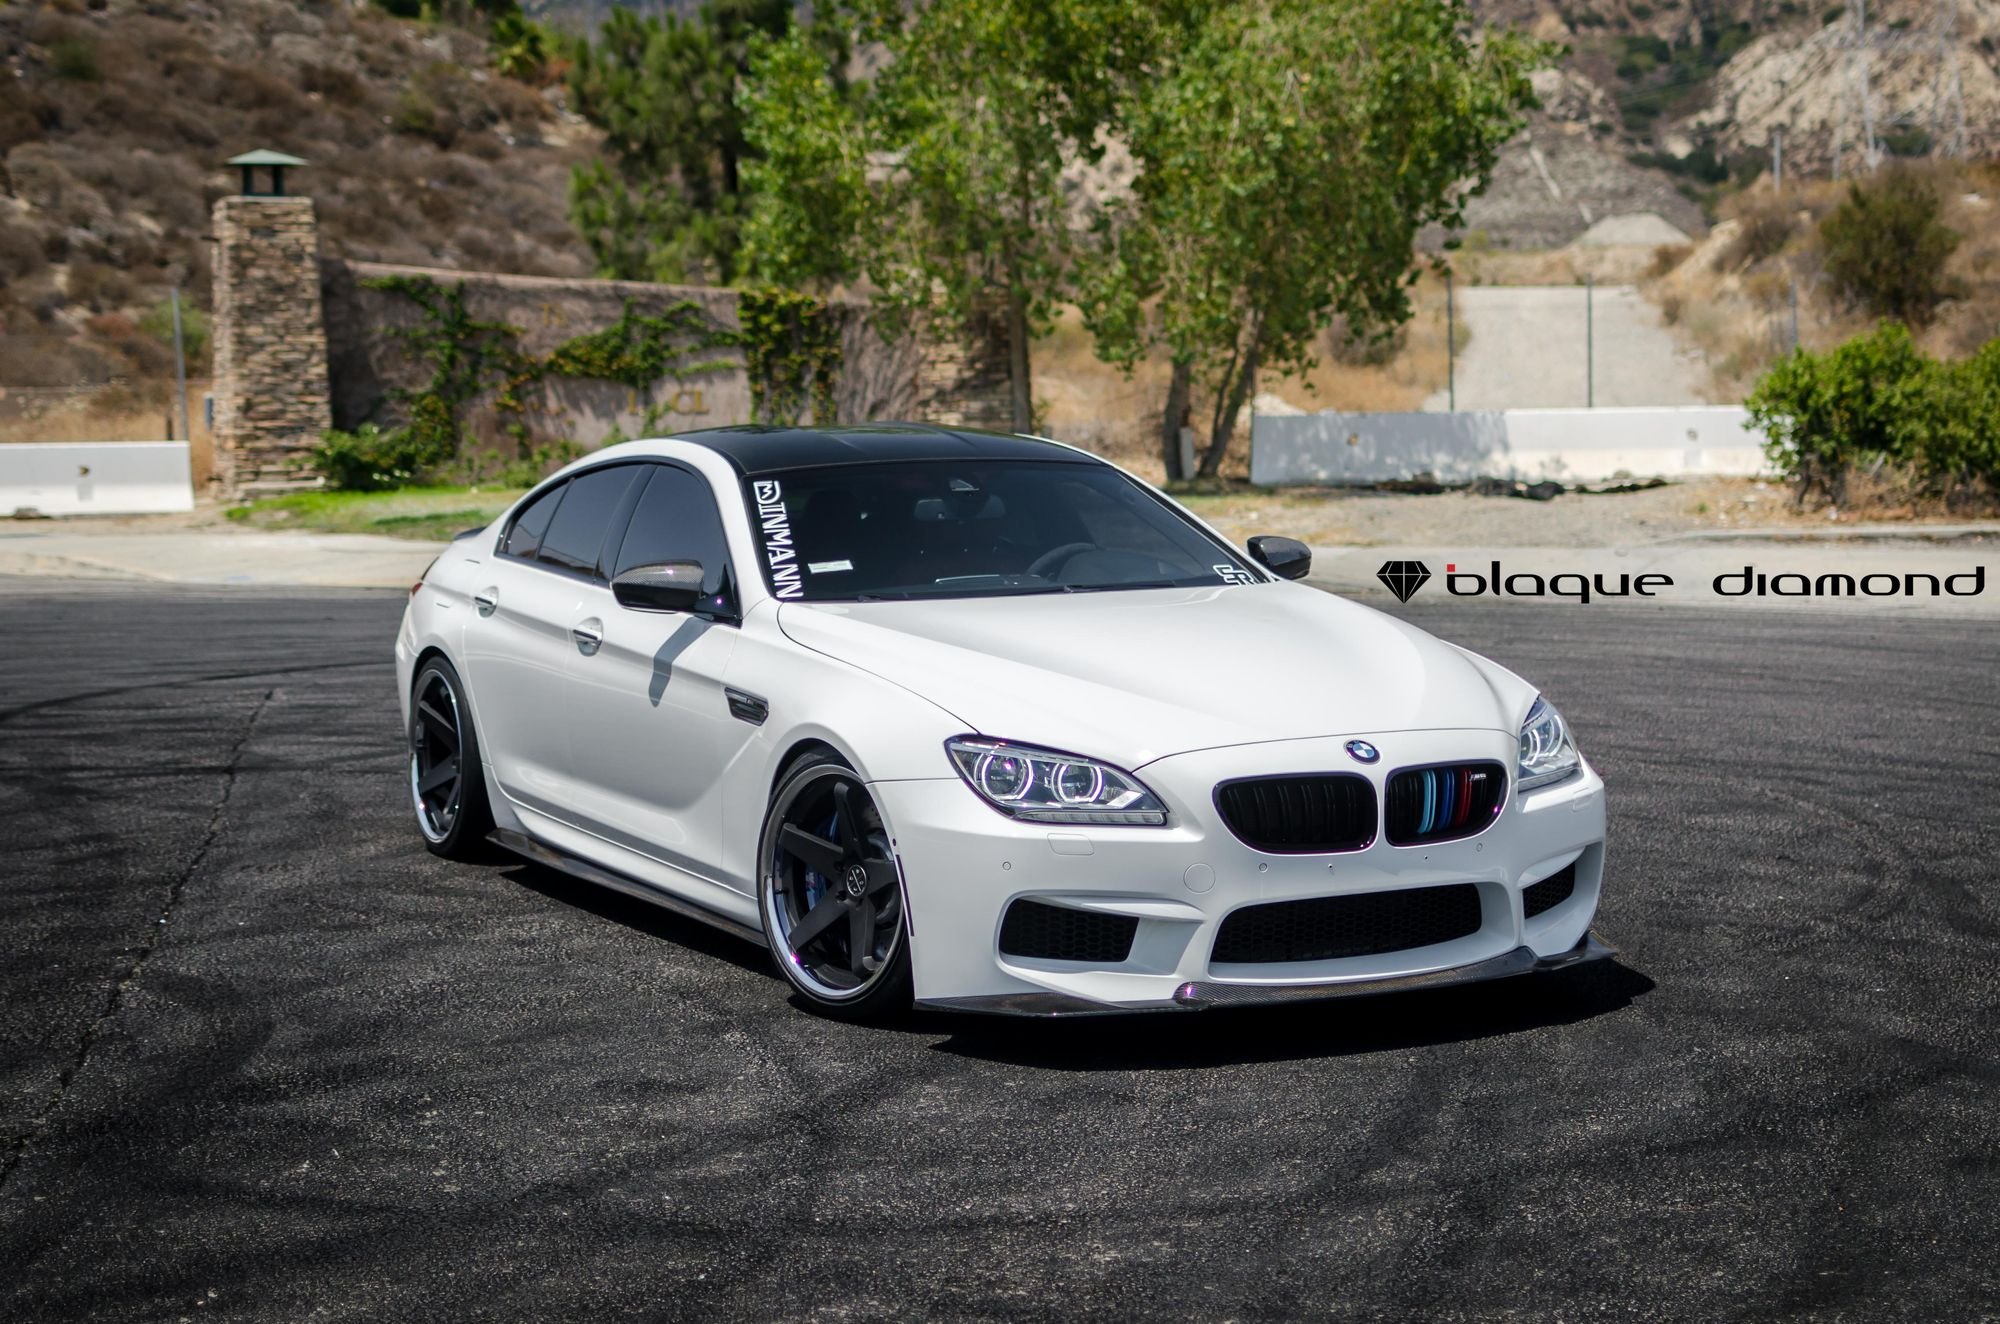 White BMW 6-Series with Custom Blaque Diamond Rims - Photo by Blaque Diamond